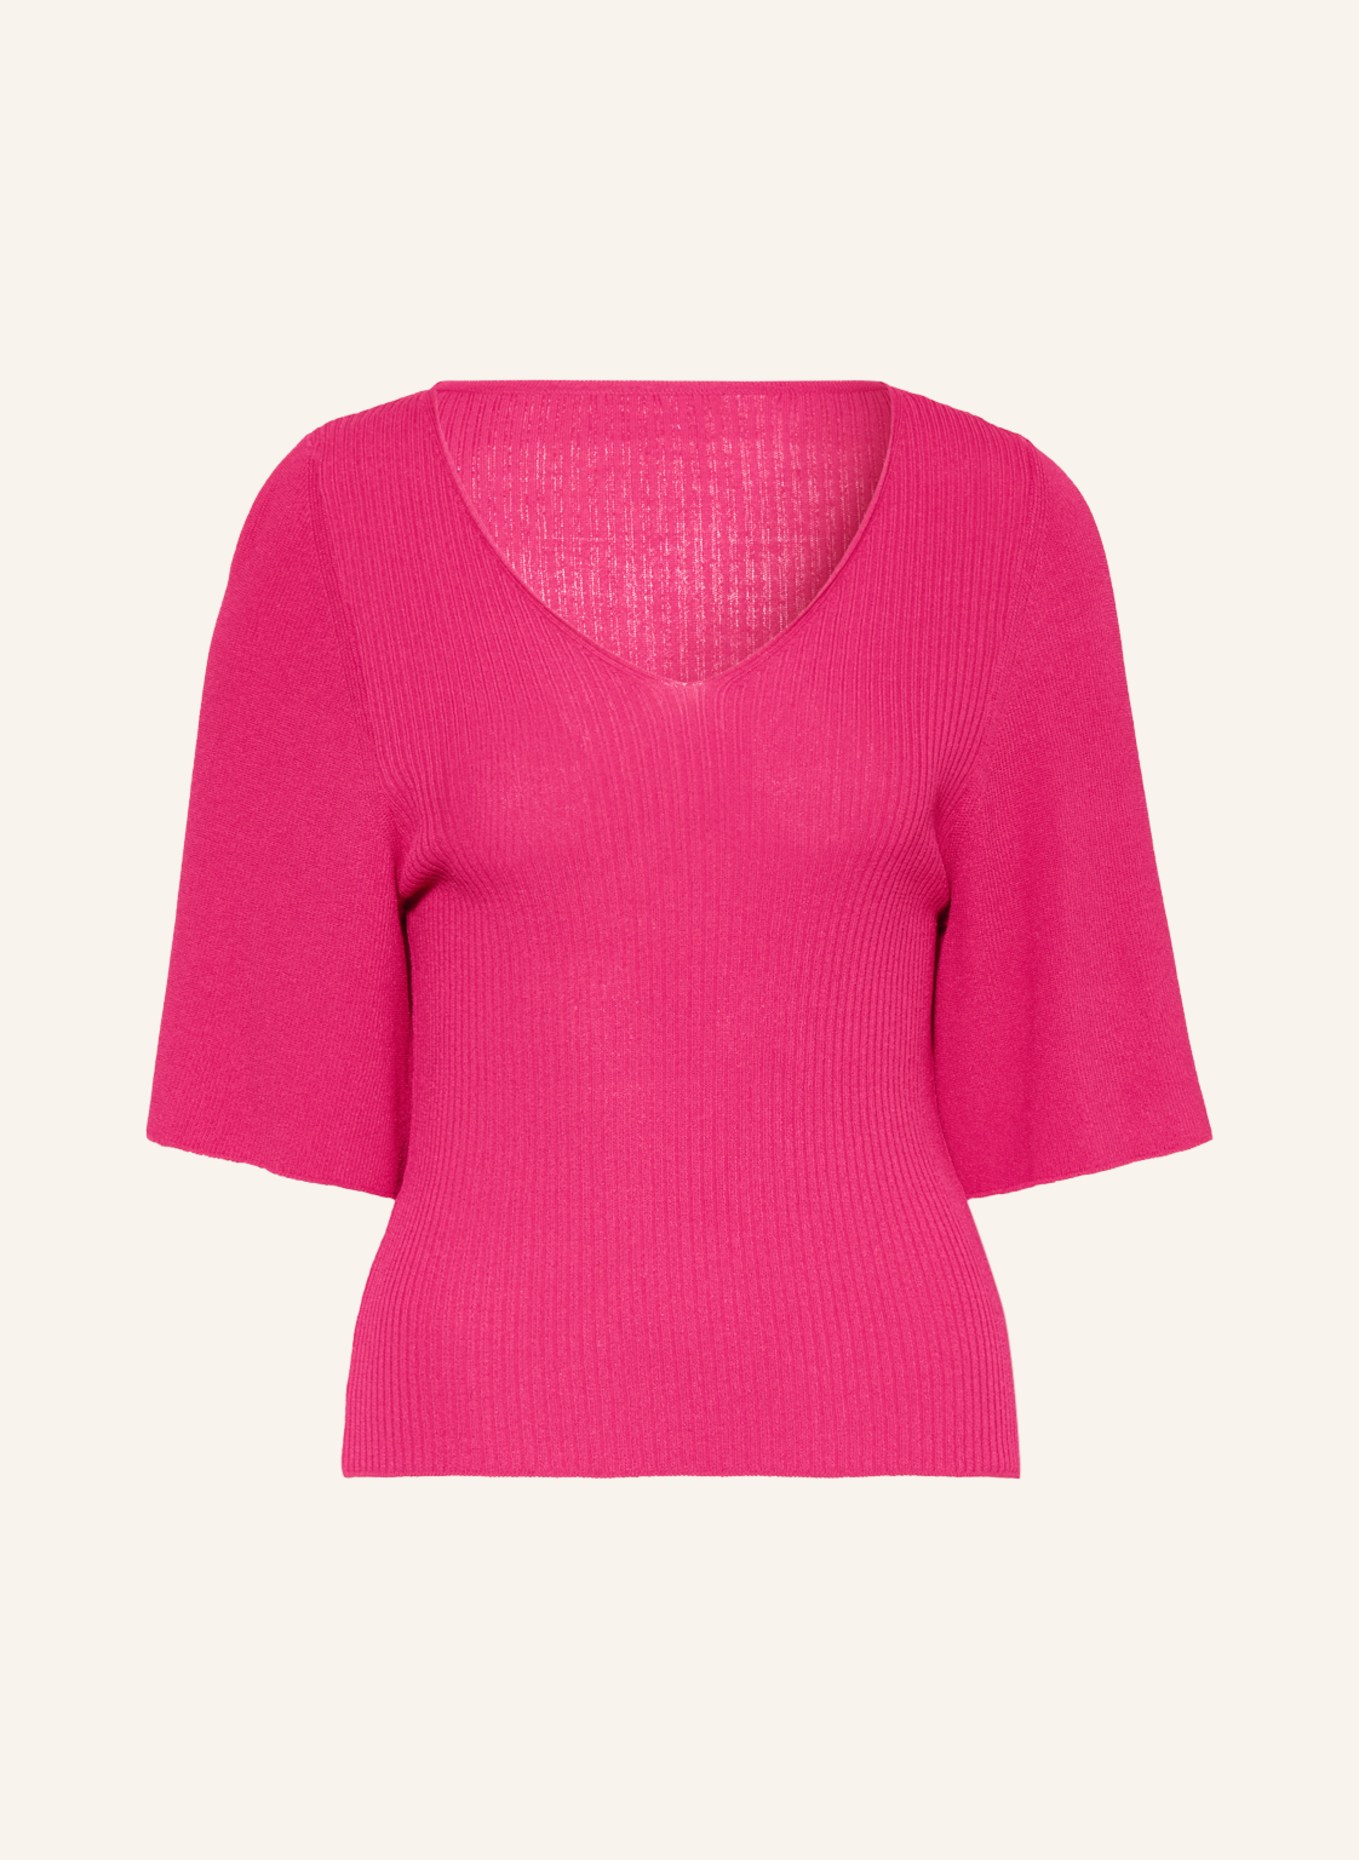 RIANI Strickshirt mit 3/4-Arm, Farbe: PINK (Bild 1)